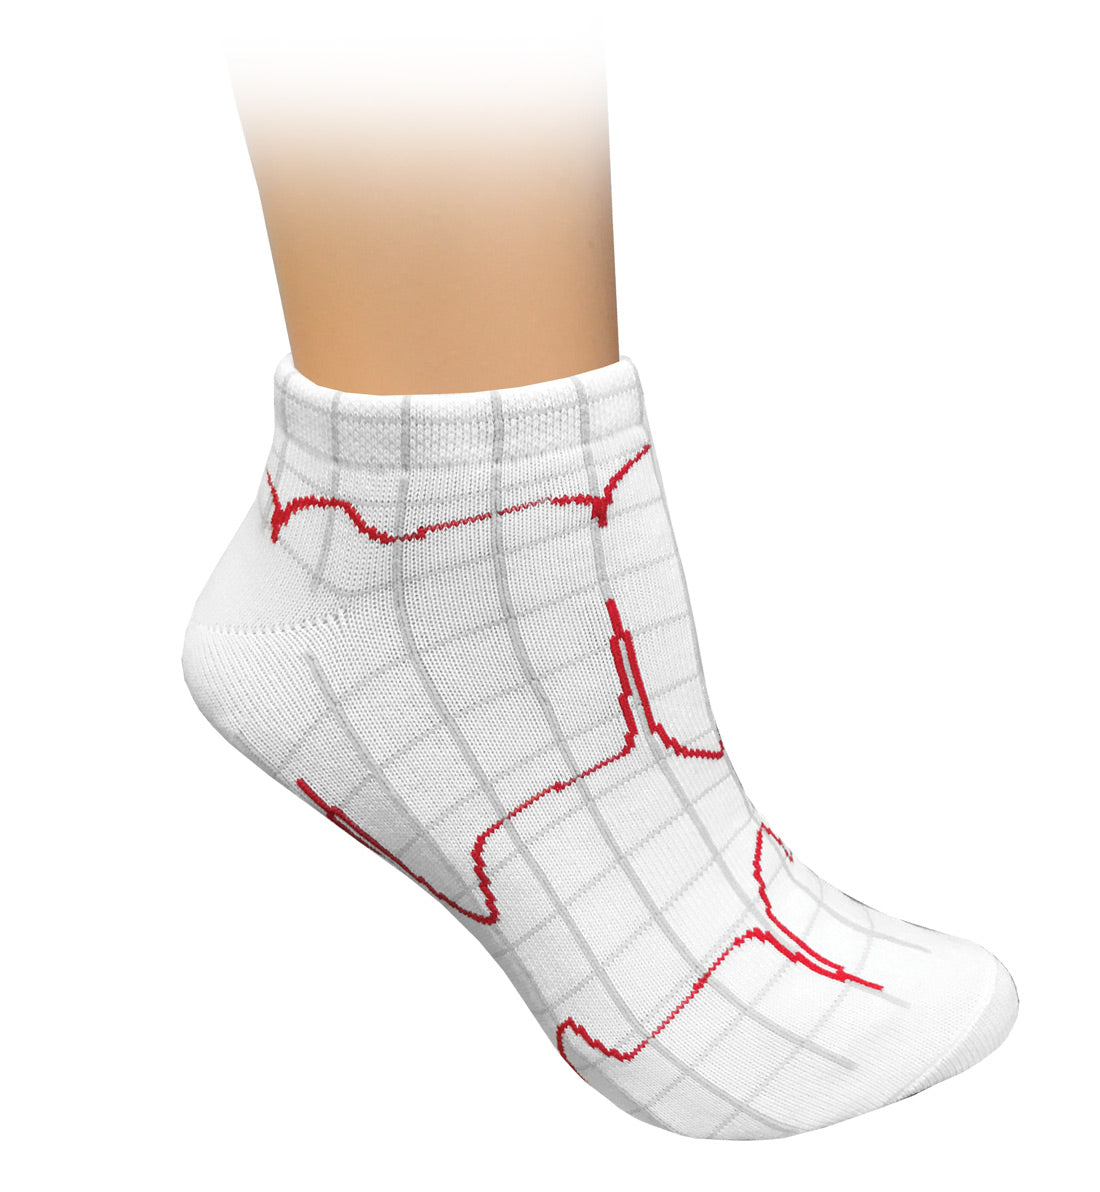 Nurse Ankle Socks by Prestige / EKG on White